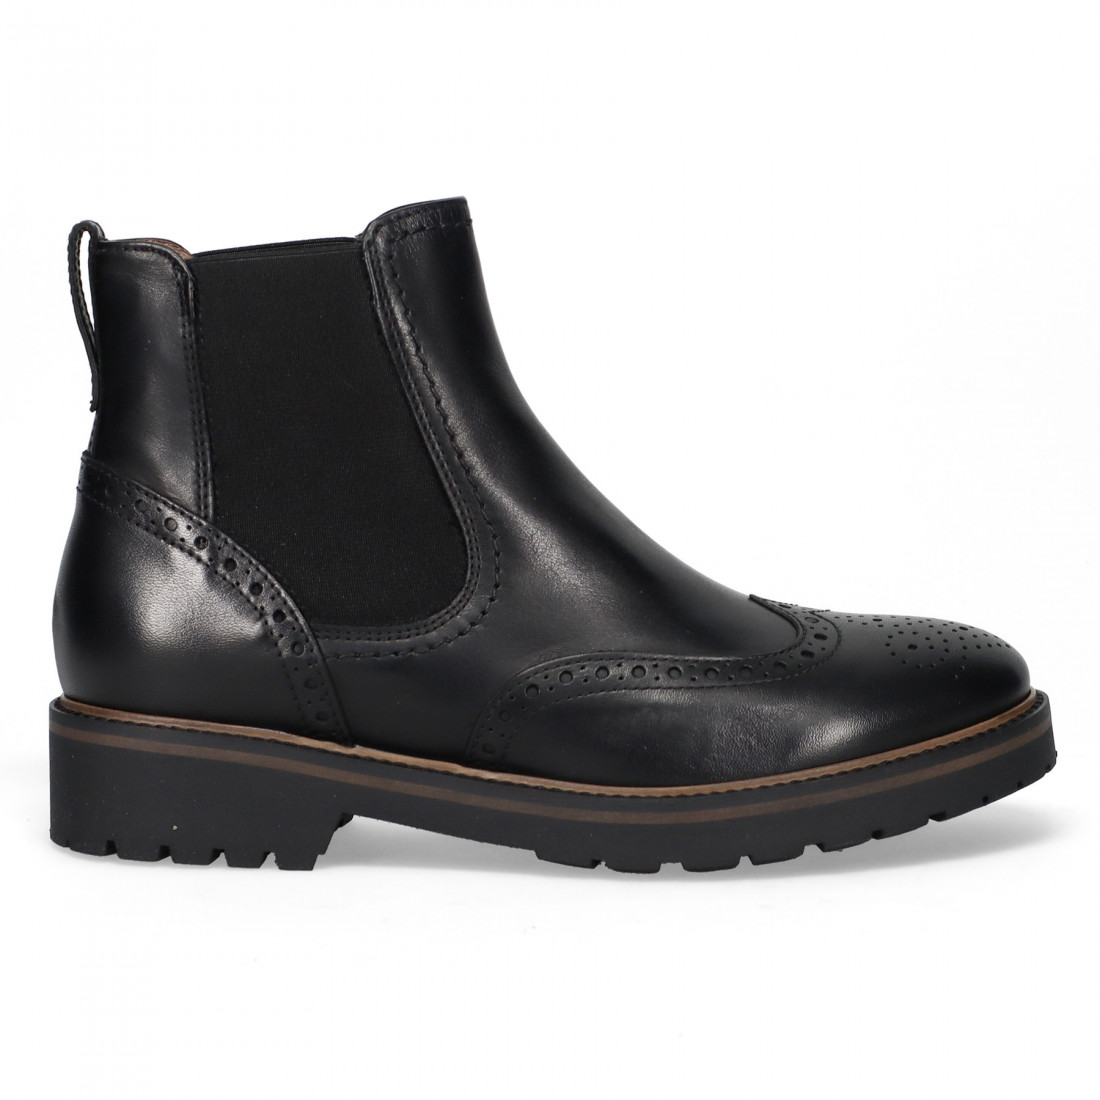 NeroGiardini ankle boots in black leather with elastics